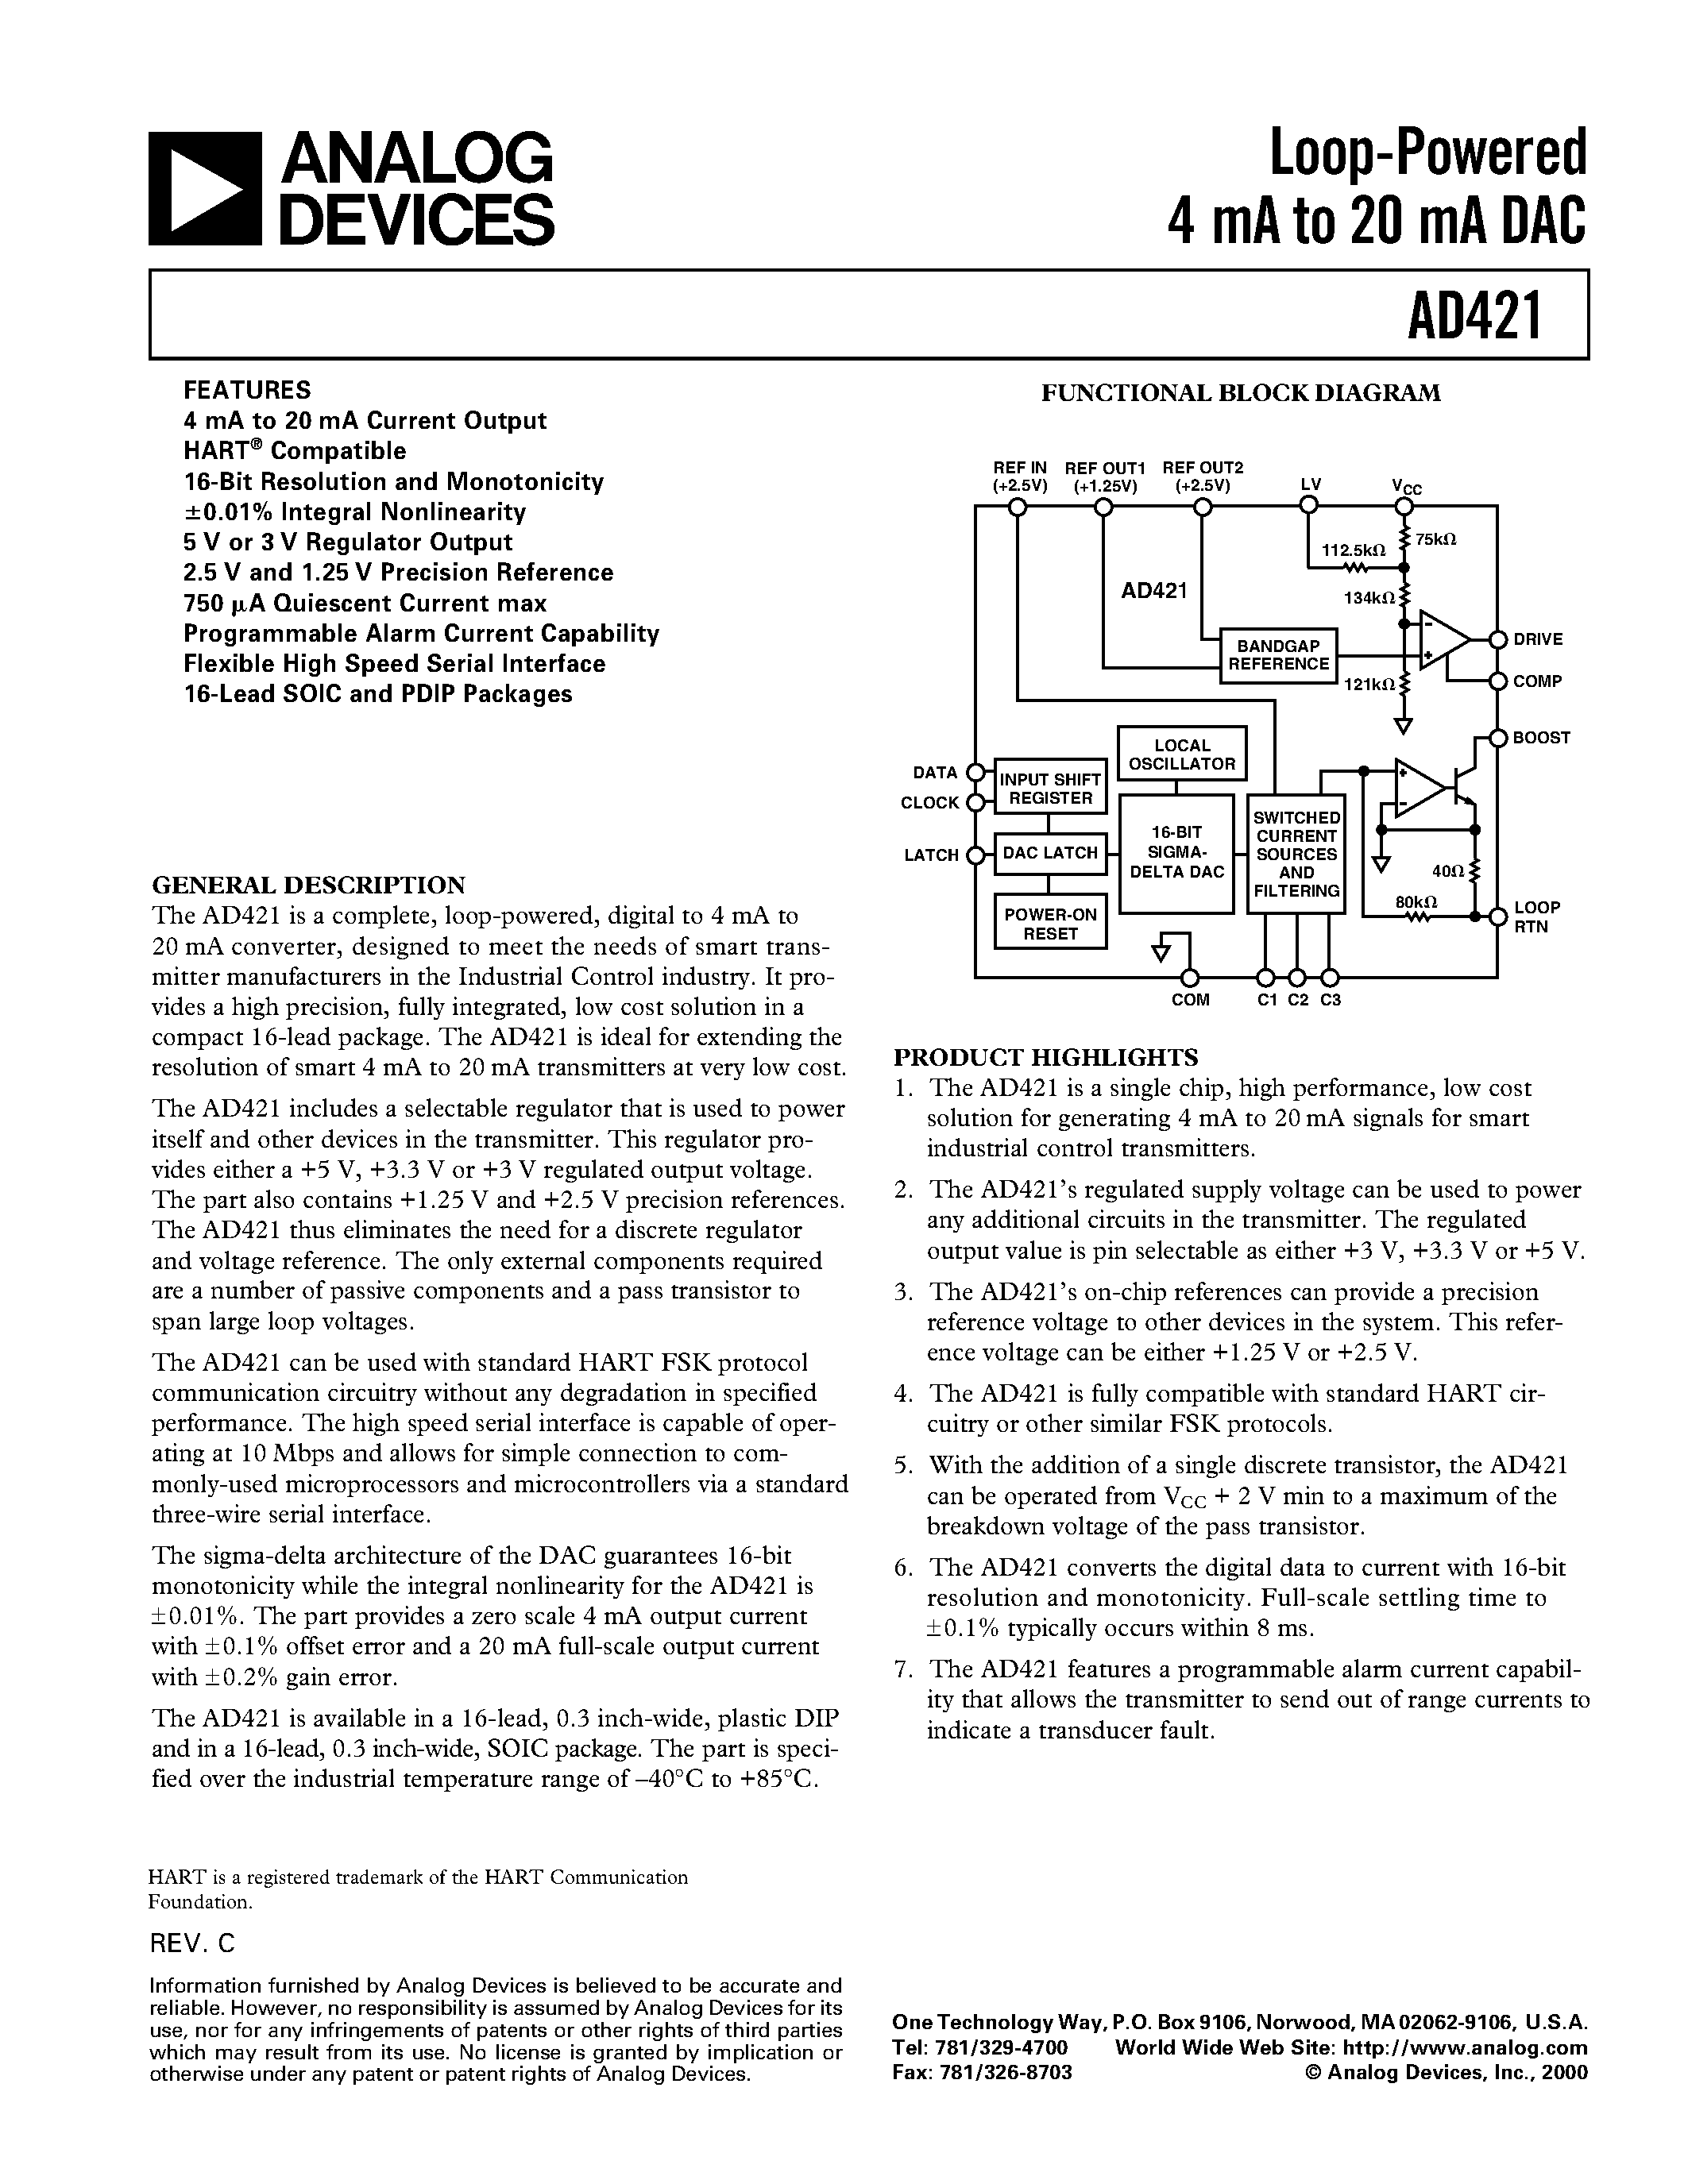 Datasheet EVAL-AD1953EB - SigmaDSP 3-Channel/ 26-Bit Signal Processing DAC page 1